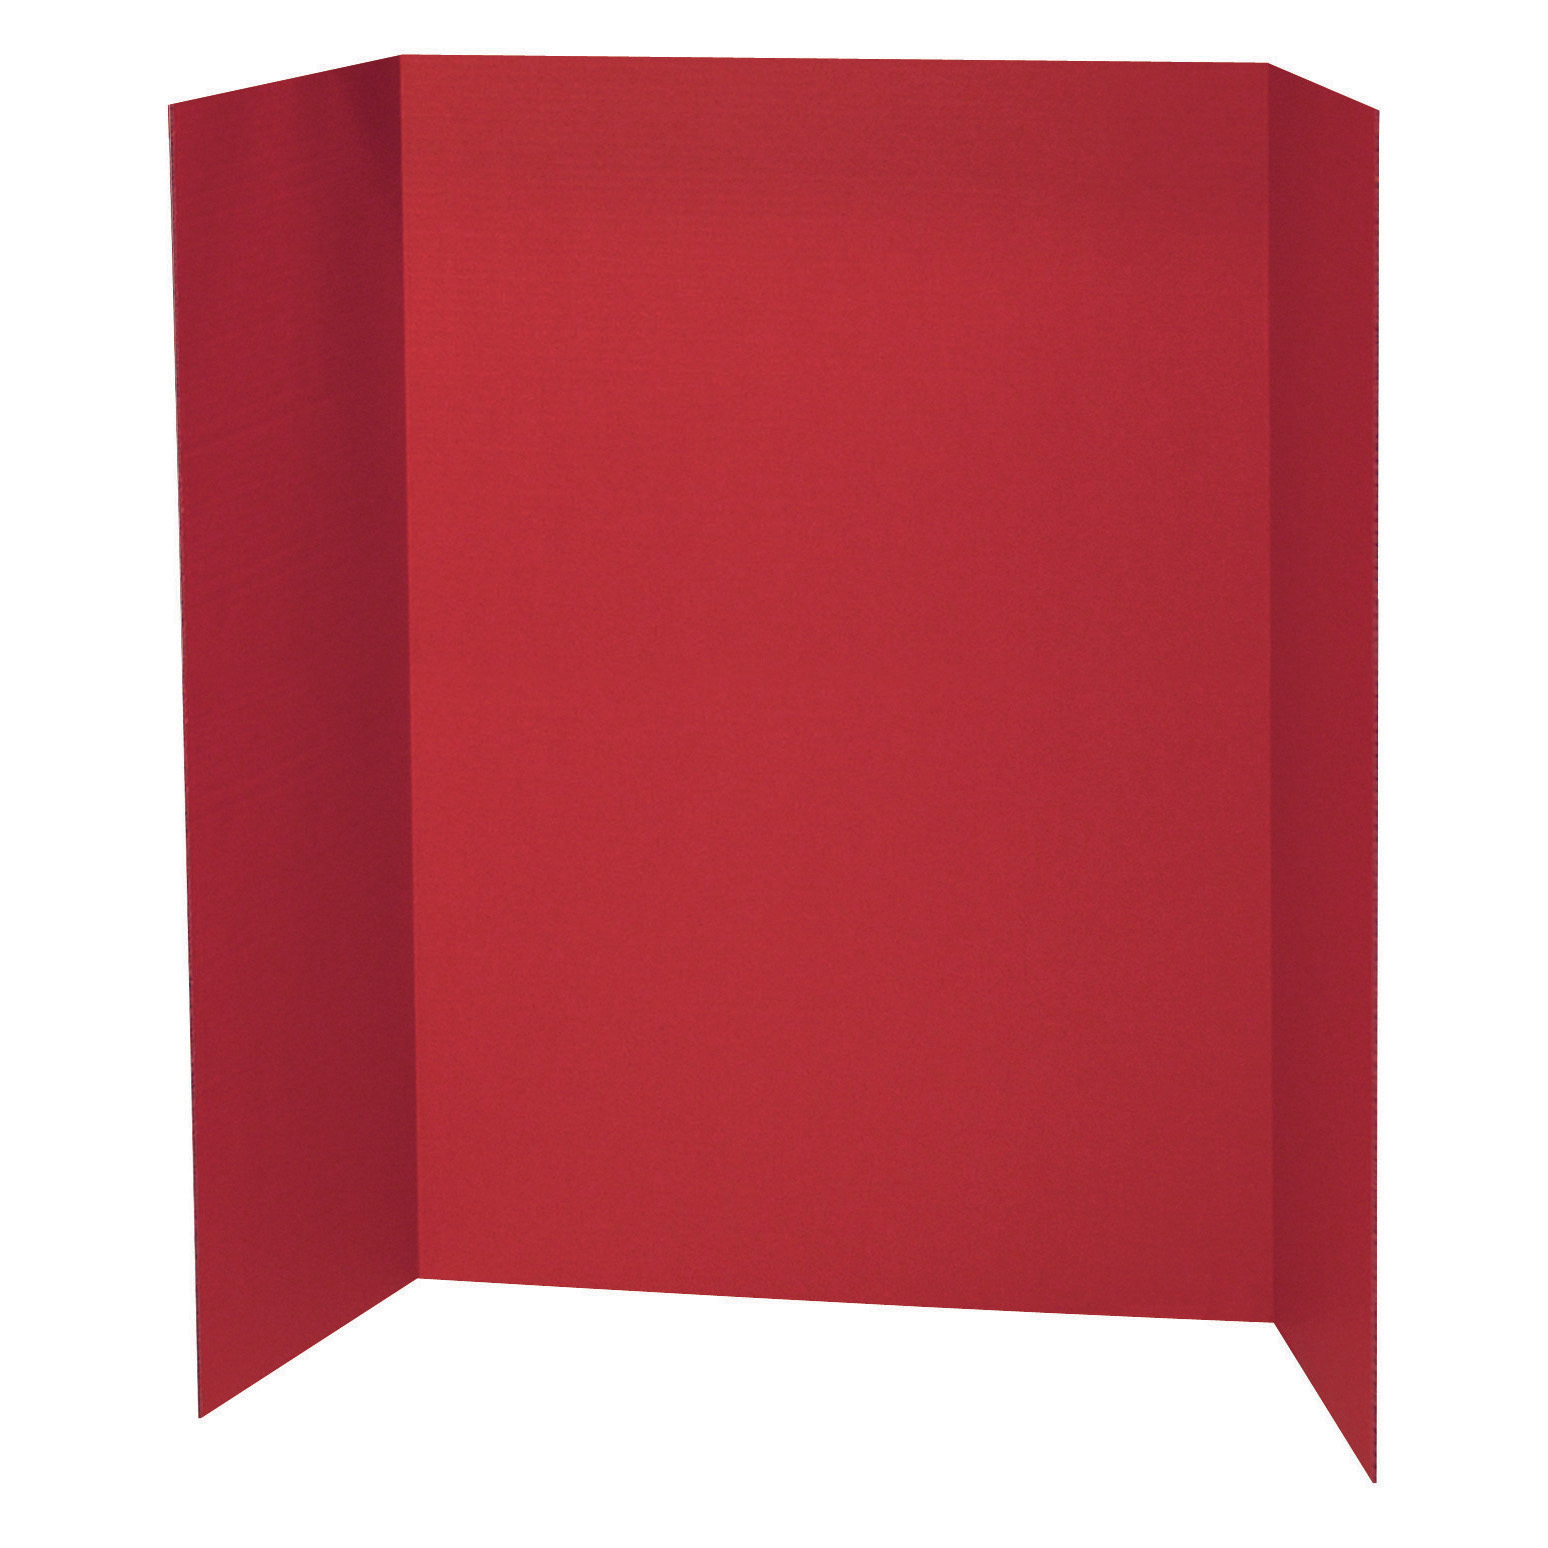 Pacon Red Presentation Board 48x36